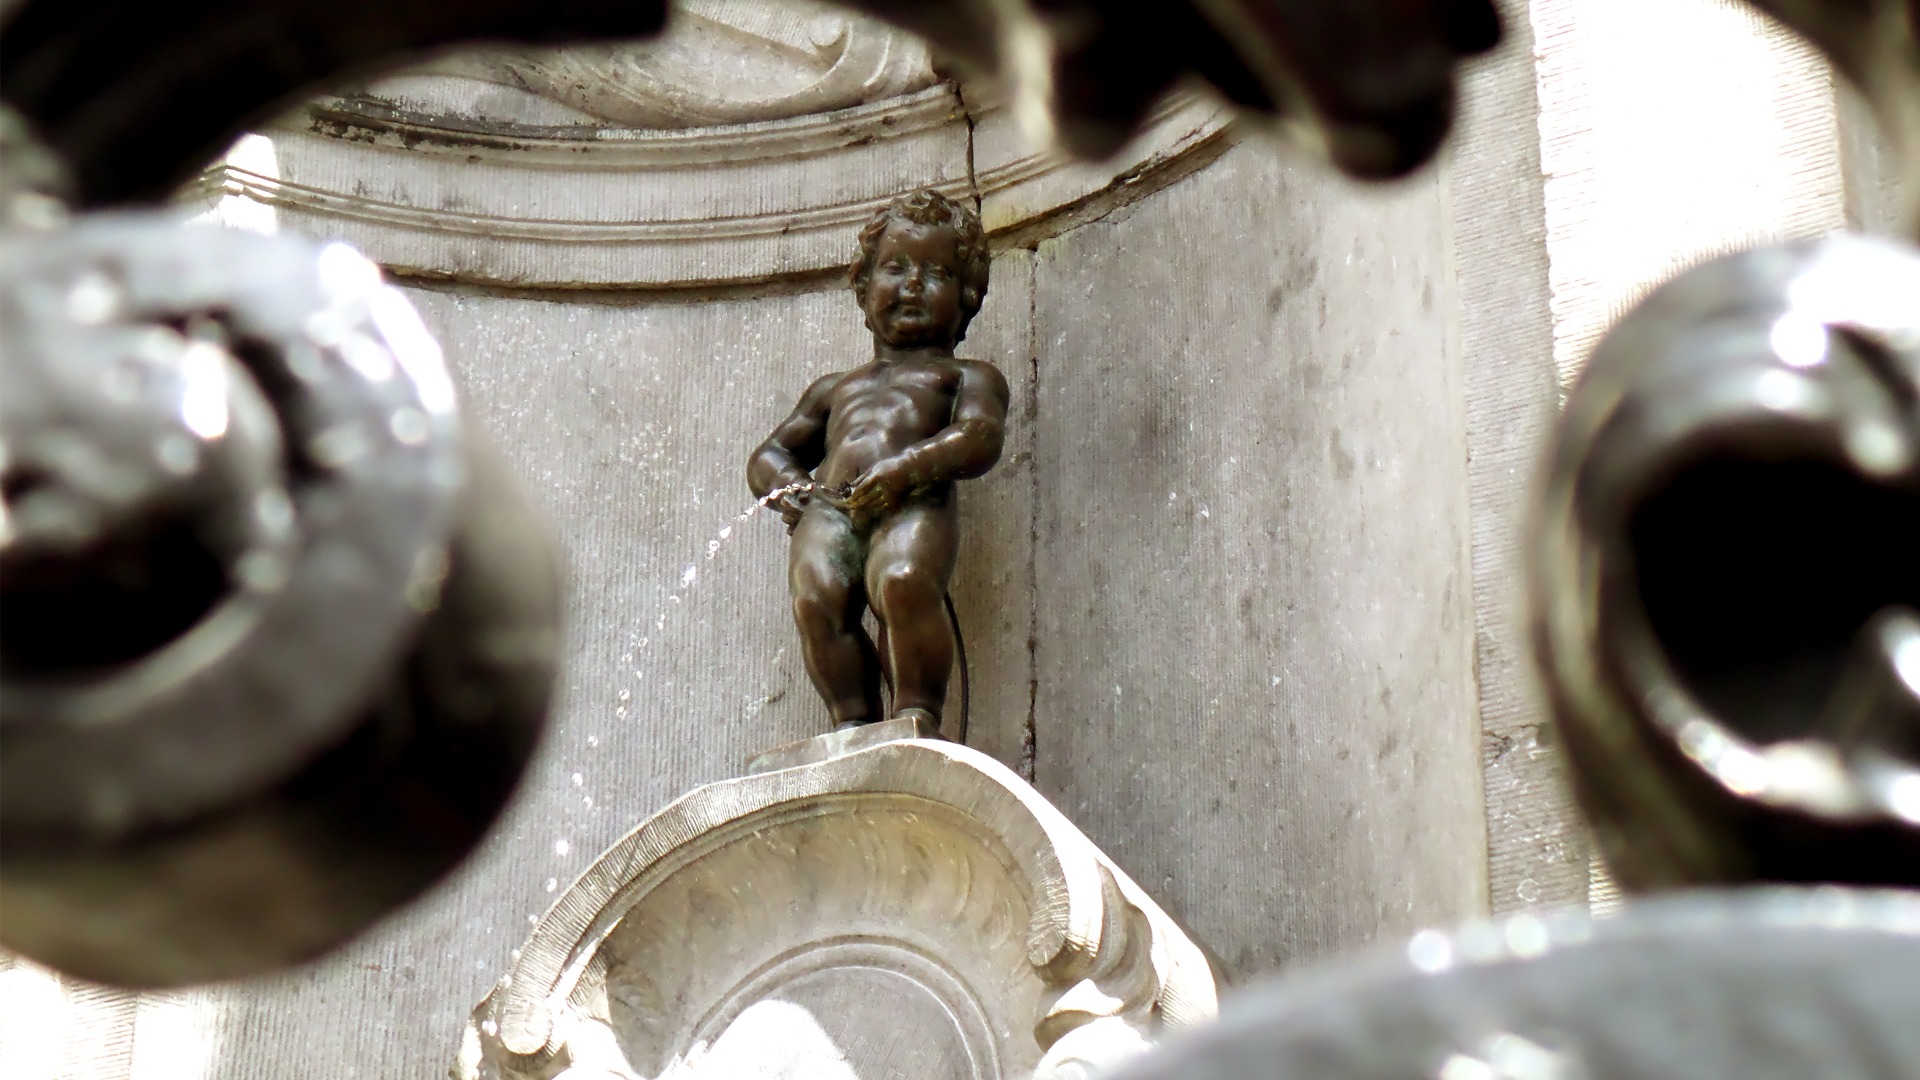 This image shows Manneken Pis, the bronze statue of a little boy. 